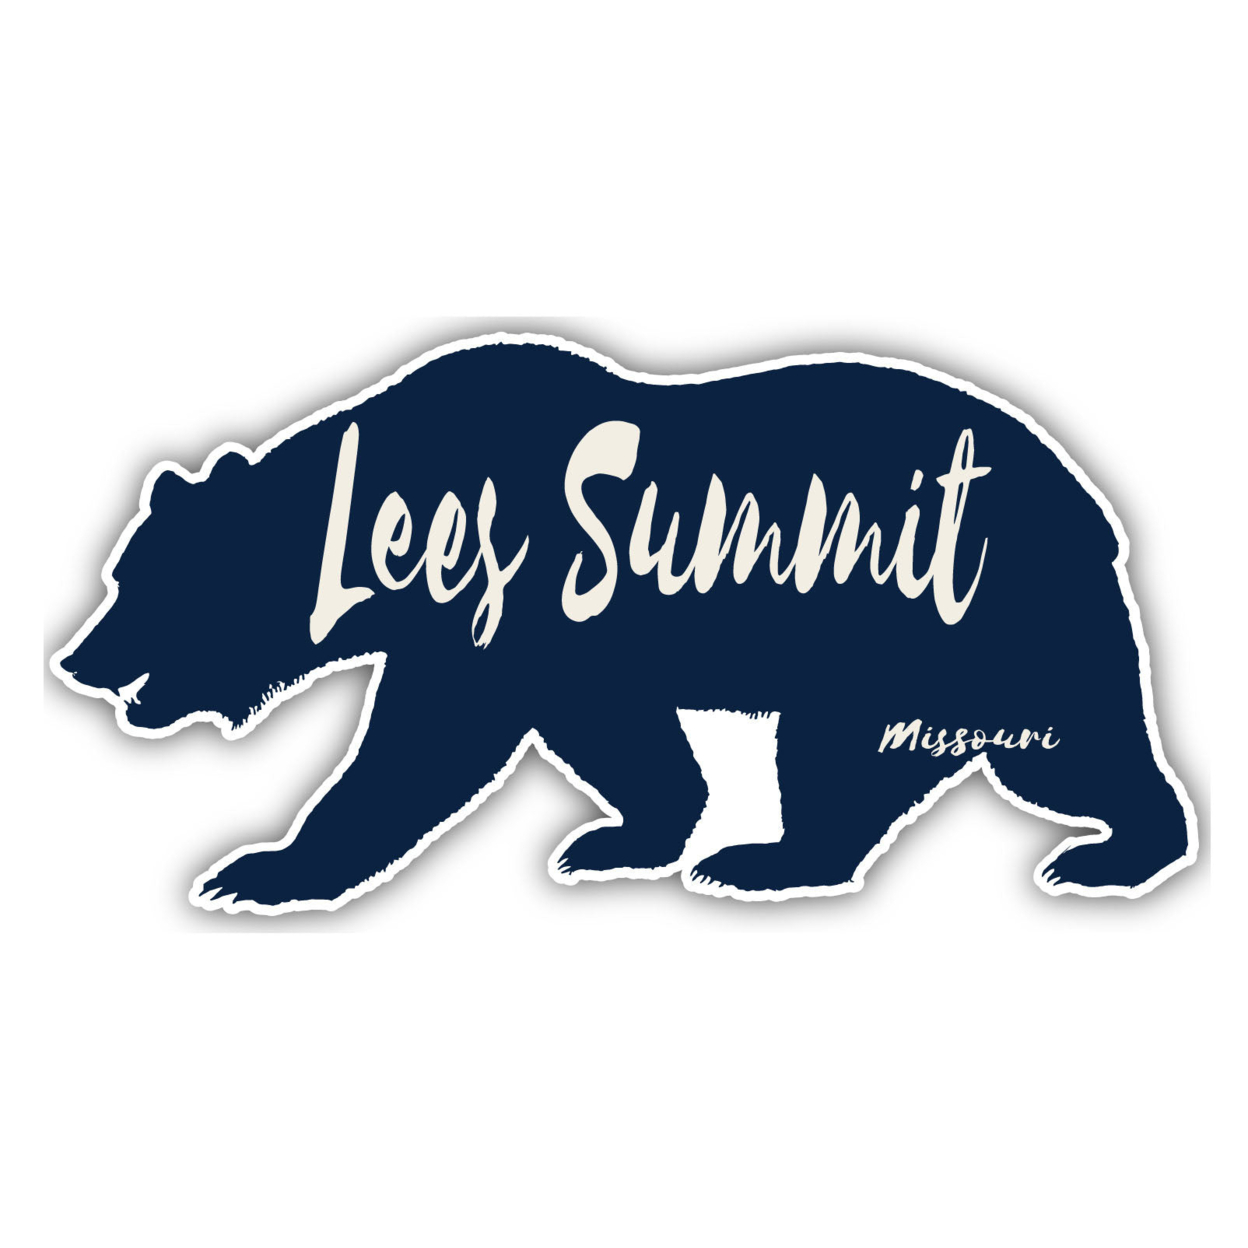 Lees Summit Missouri Souvenir Decorative Stickers (Choose Theme And Size) - 2-Inch, Bear